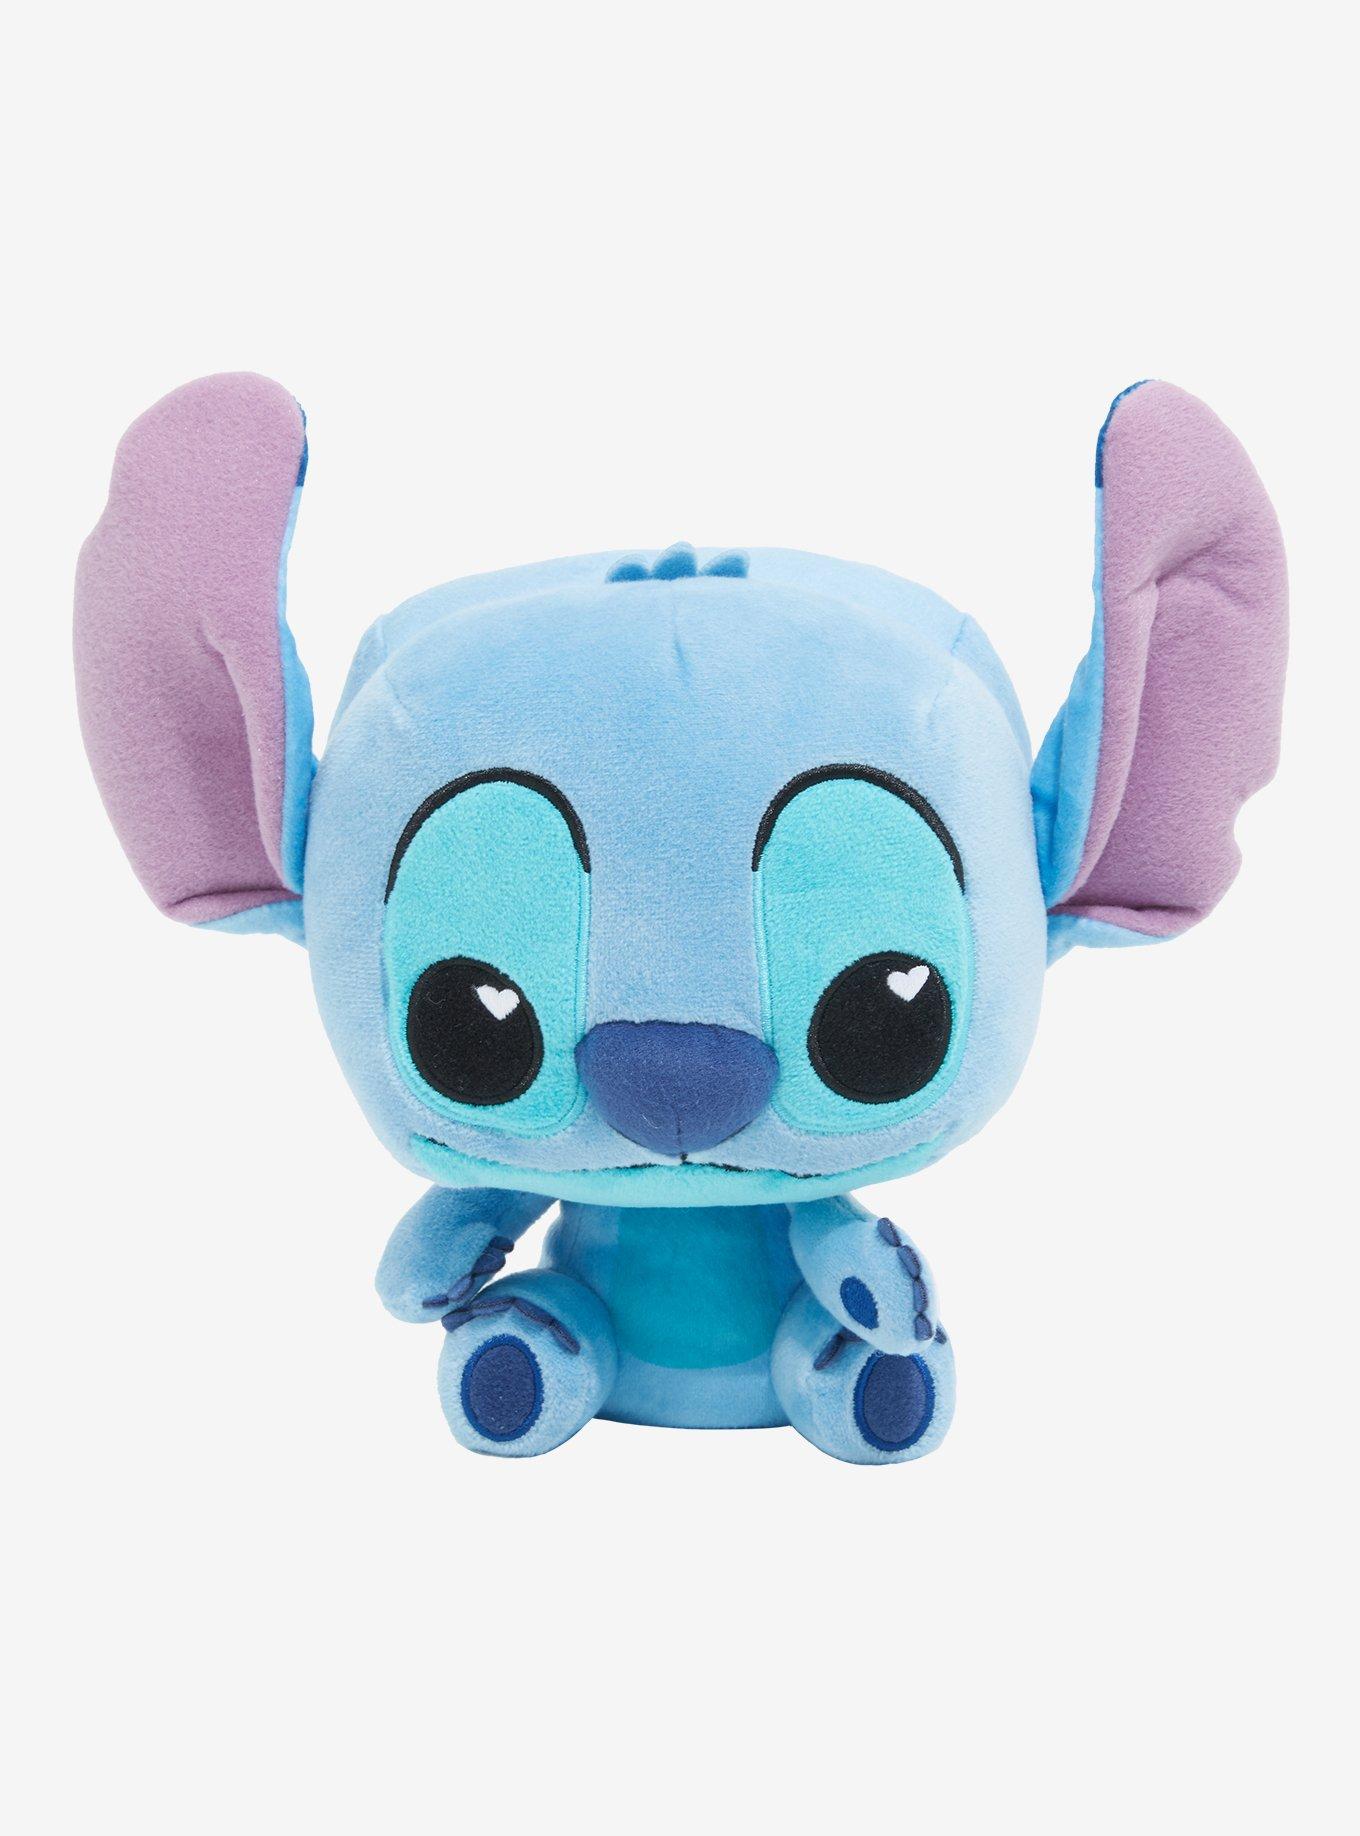 Disney Store Exclusive Stitch Plush from Lilo & Stitch Stuffed Animal 10